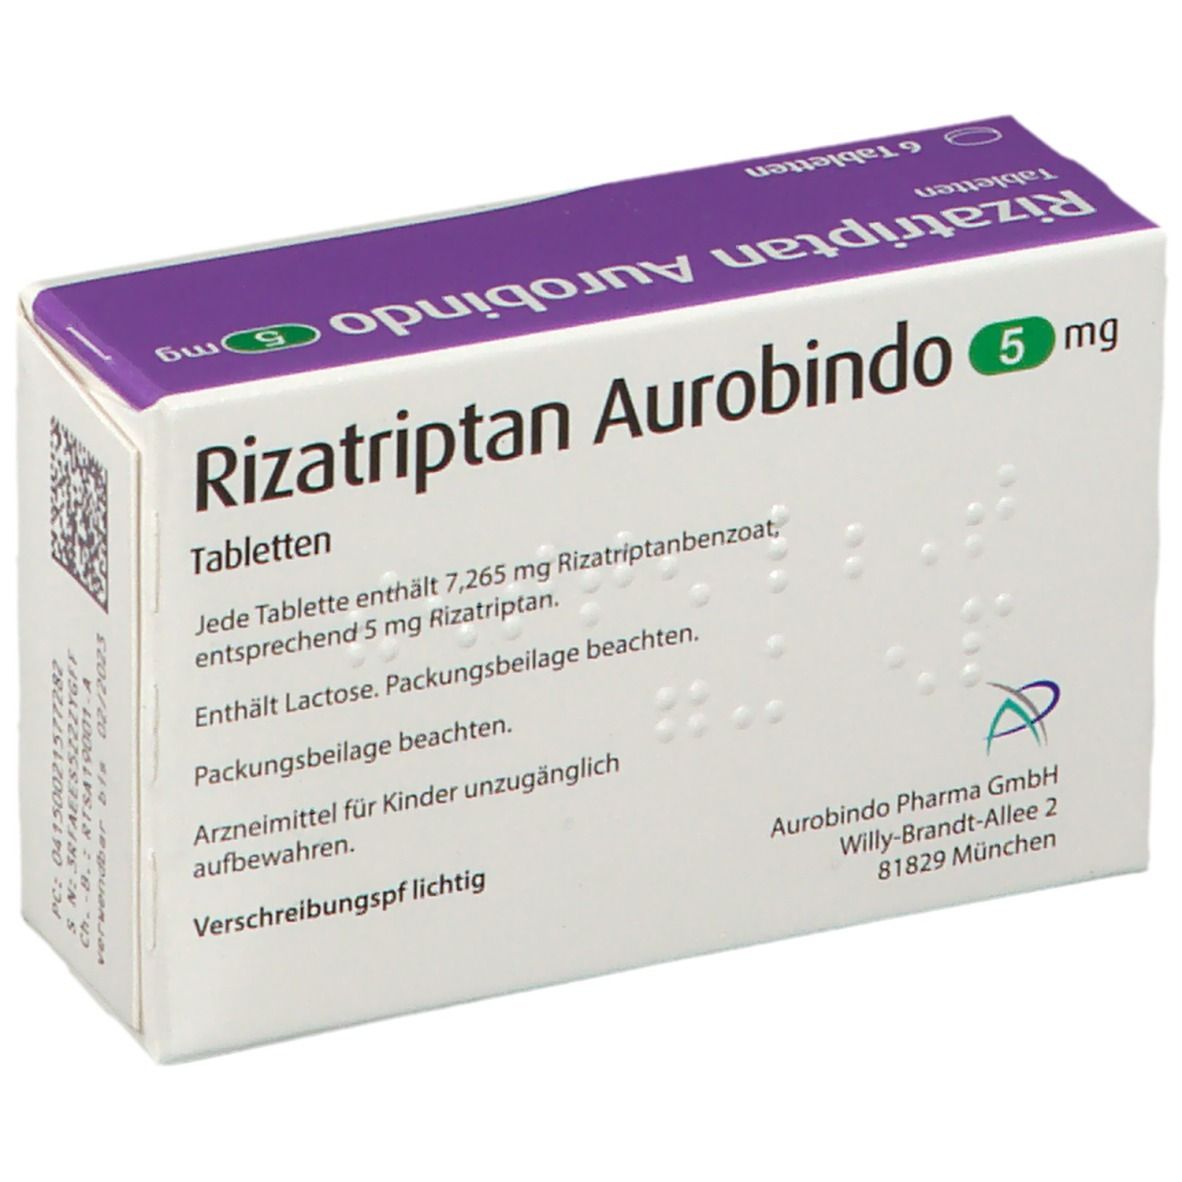 Rizatriptan Aurobindo 5 mg